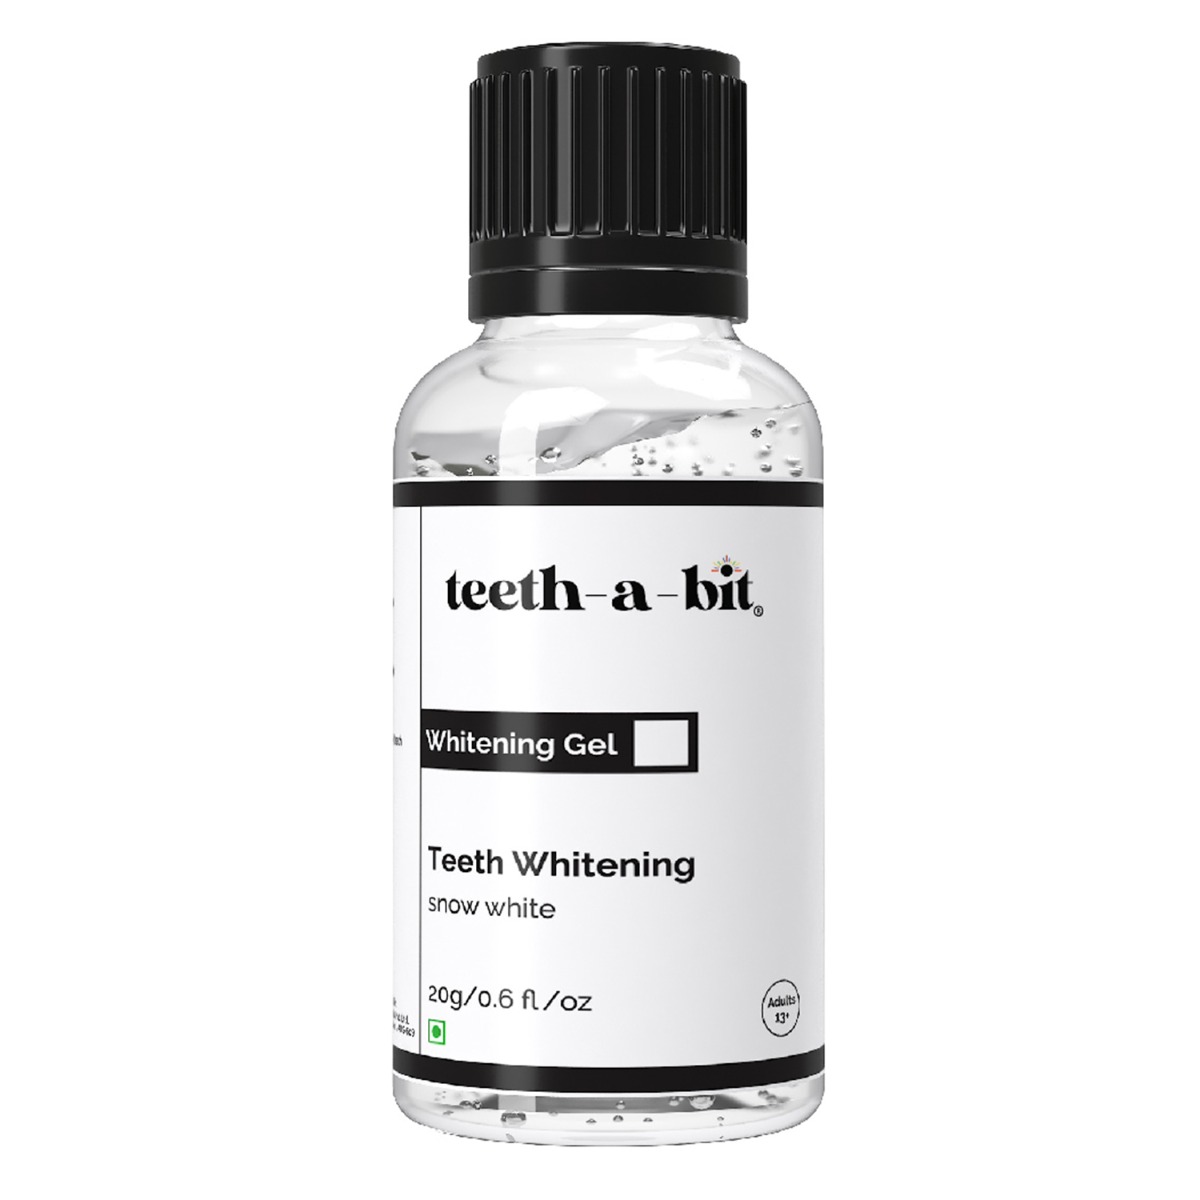 teeth-a-bit Teeth Whitening Snow White Gel, 20gm